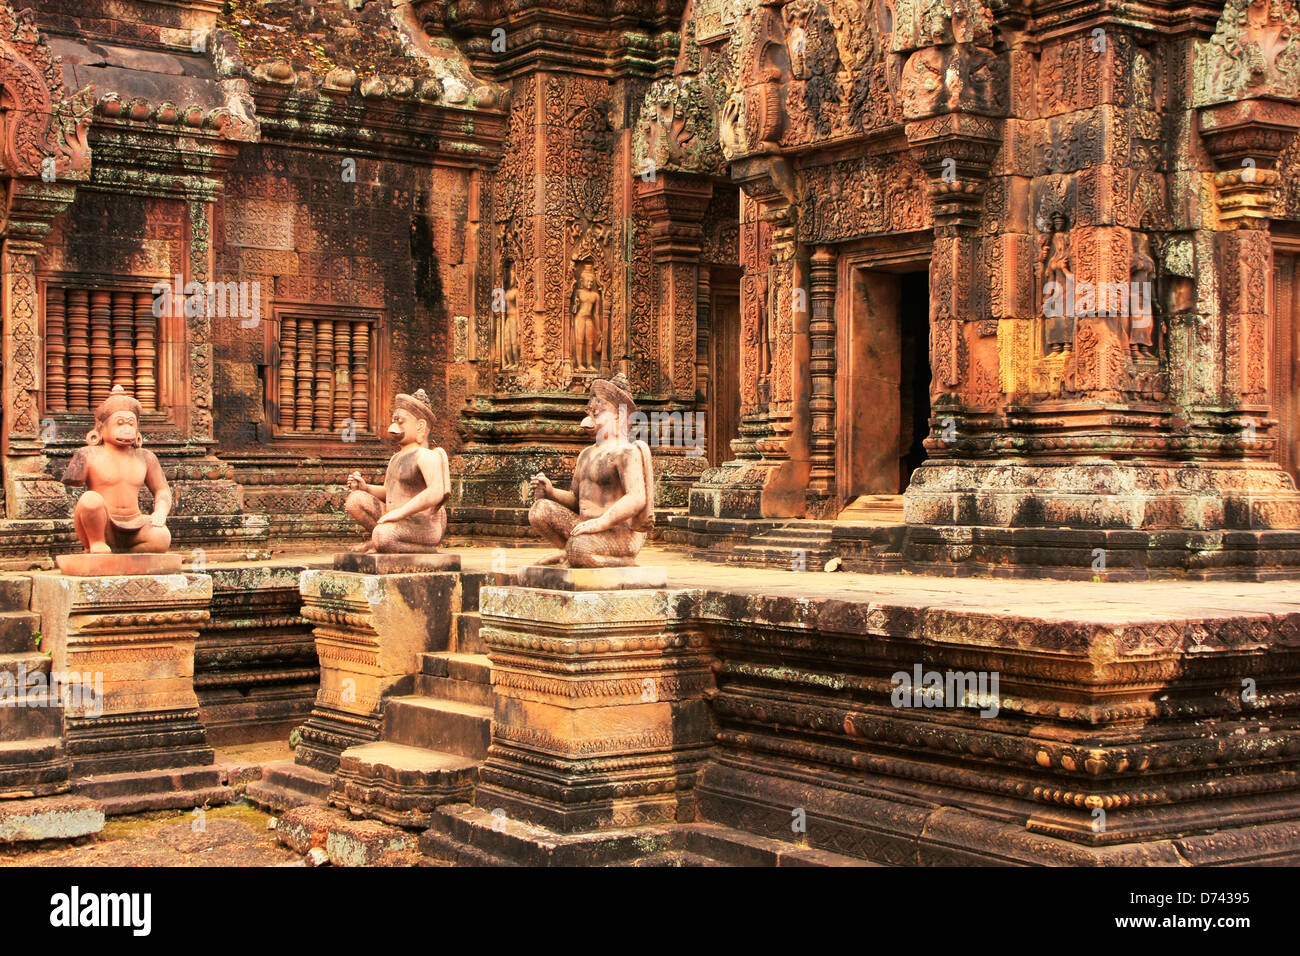 Banteay Srey temple, Angkor area, Siem Reap, Cambodia Stock Photo